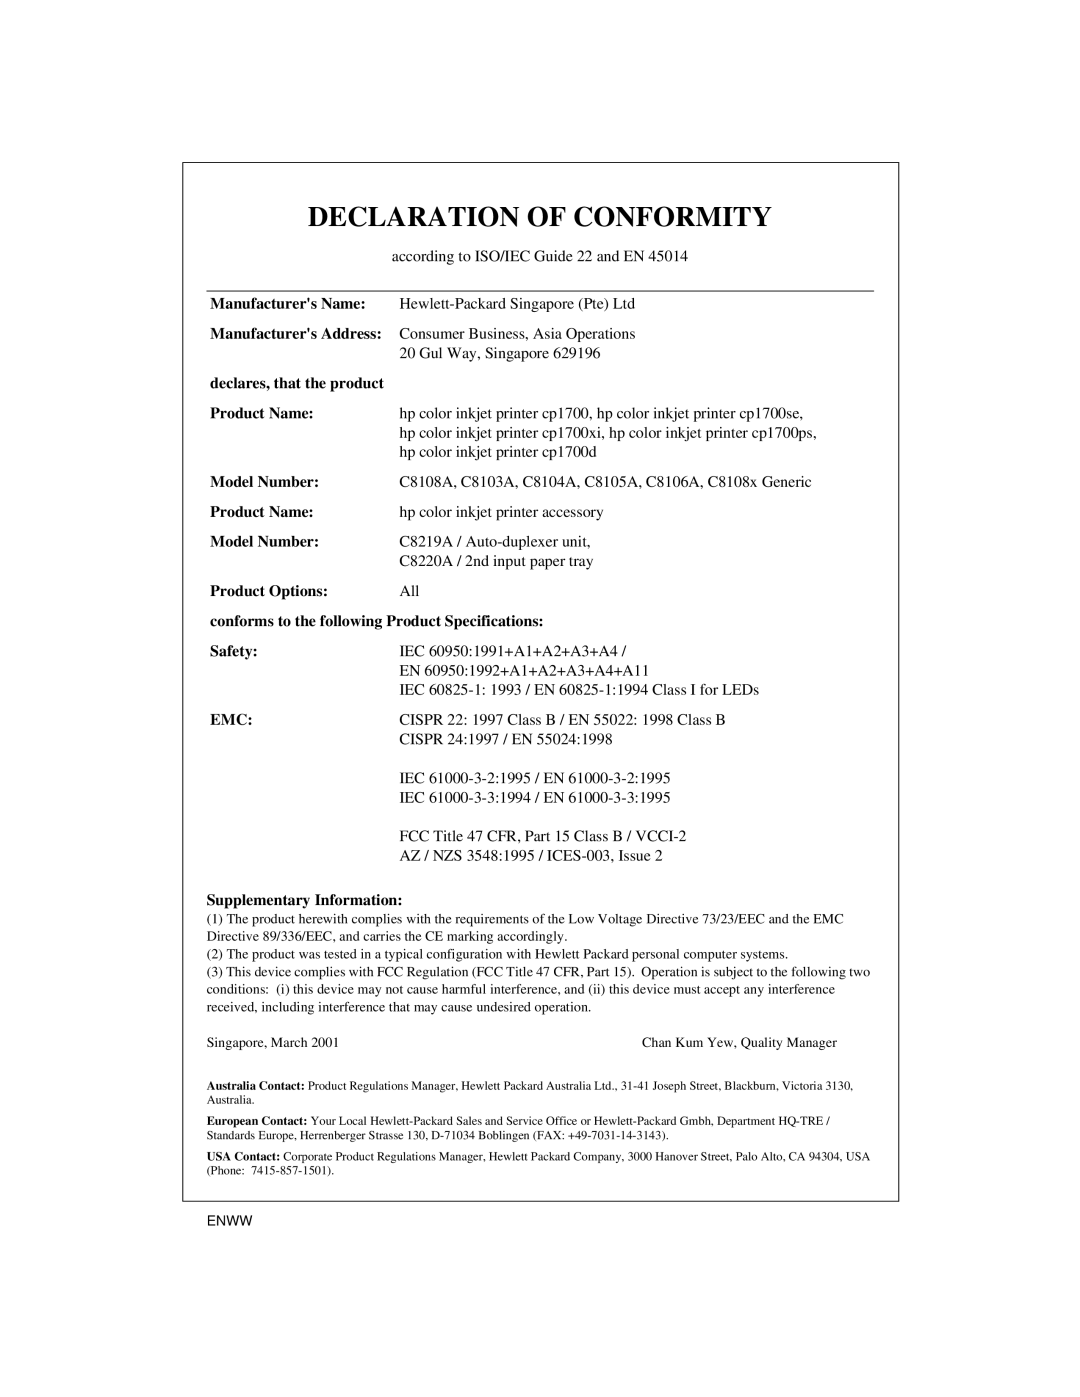 HP Color Inkjet cp1700 manual Declaration of Conformity 